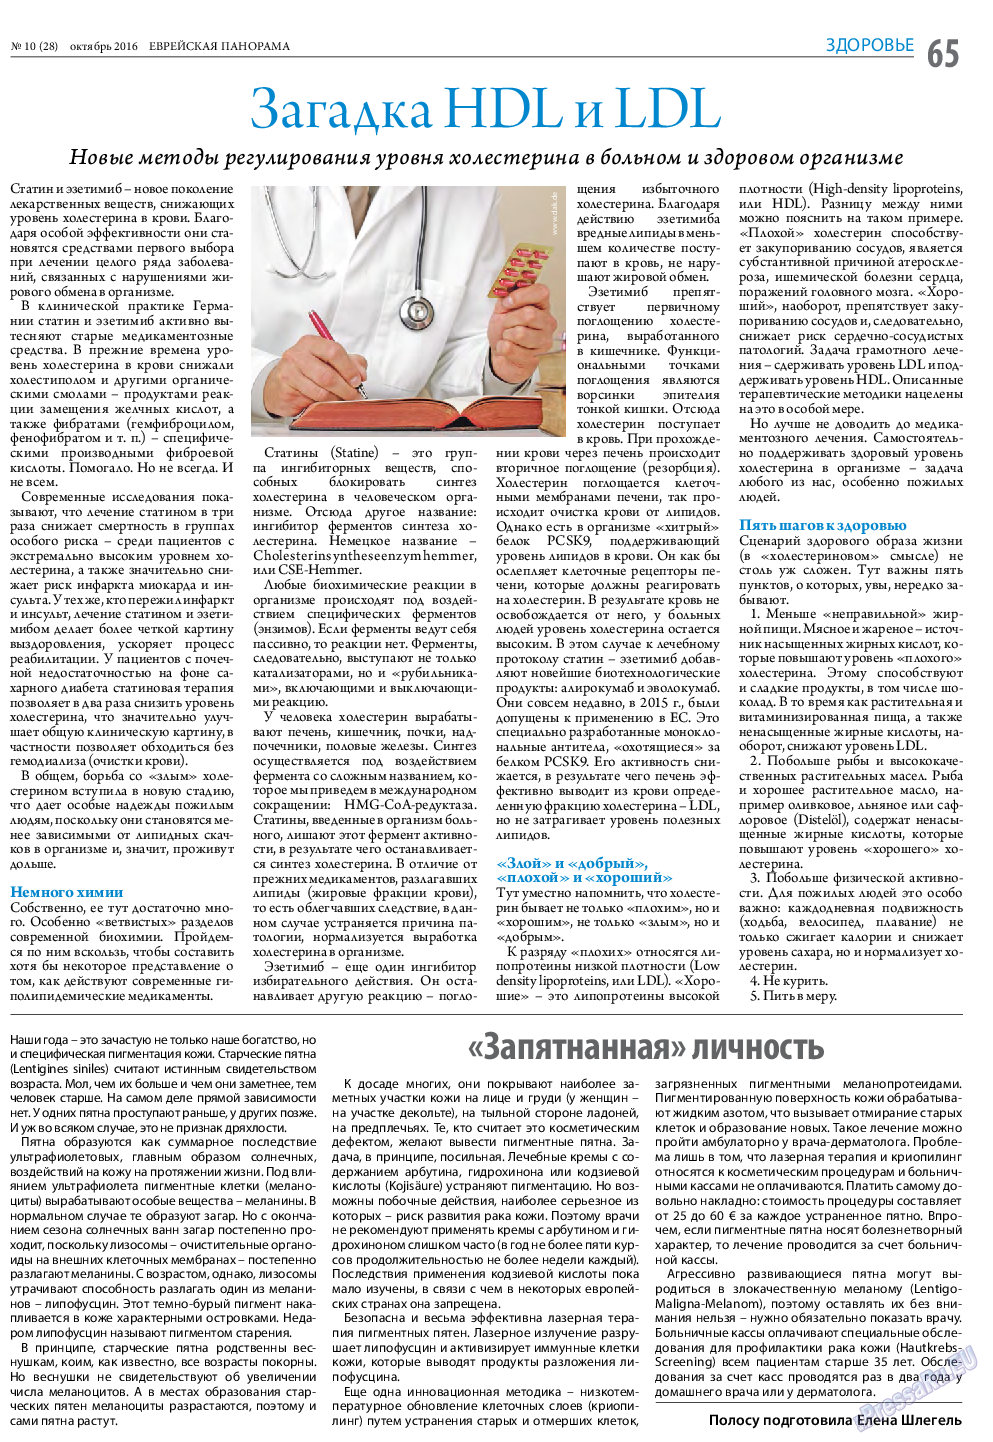 Еврейская панорама, газета. 2016 №10 стр.65